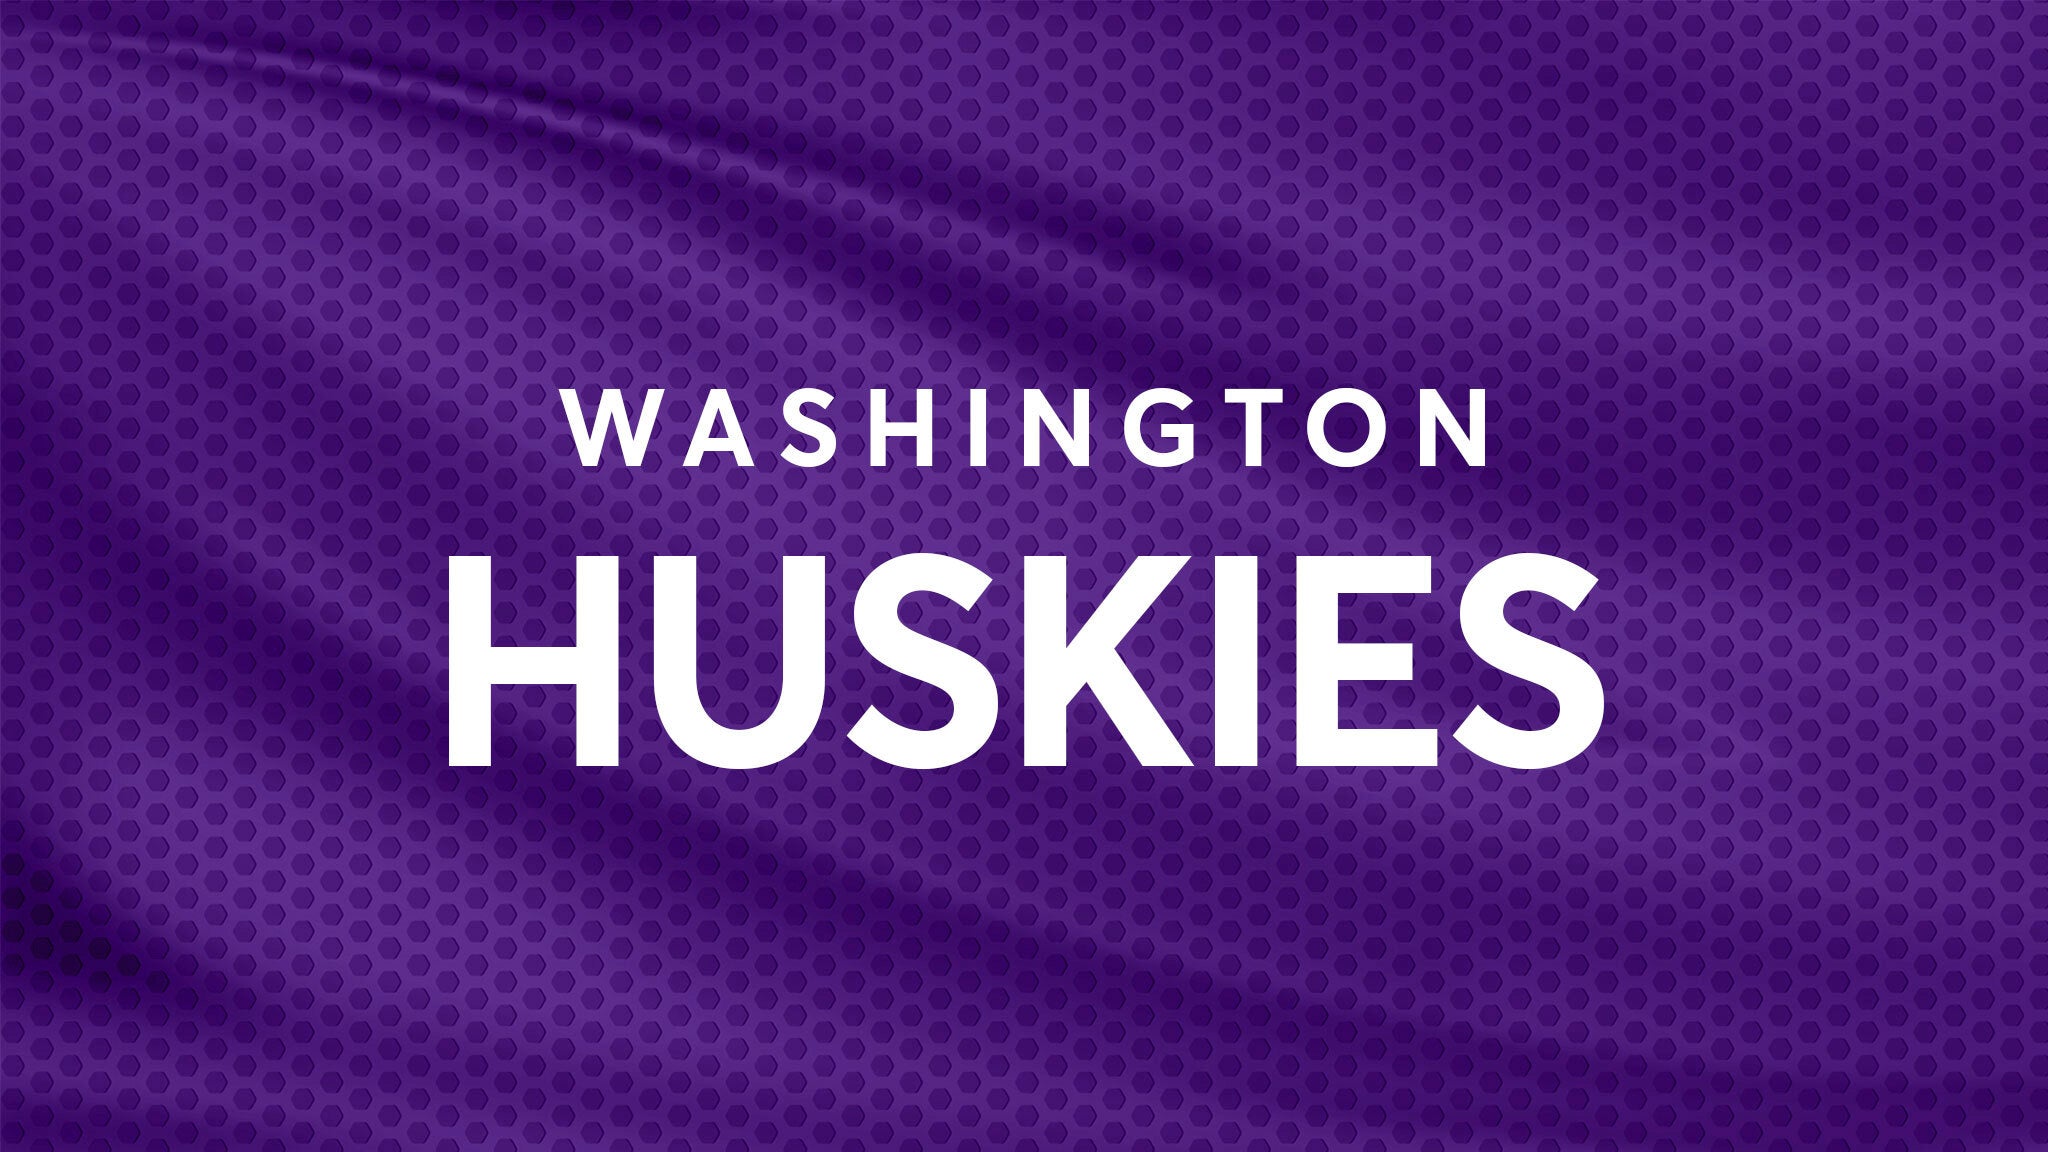 Washington Huskies Football vs. Weber State Wildcats Football hero